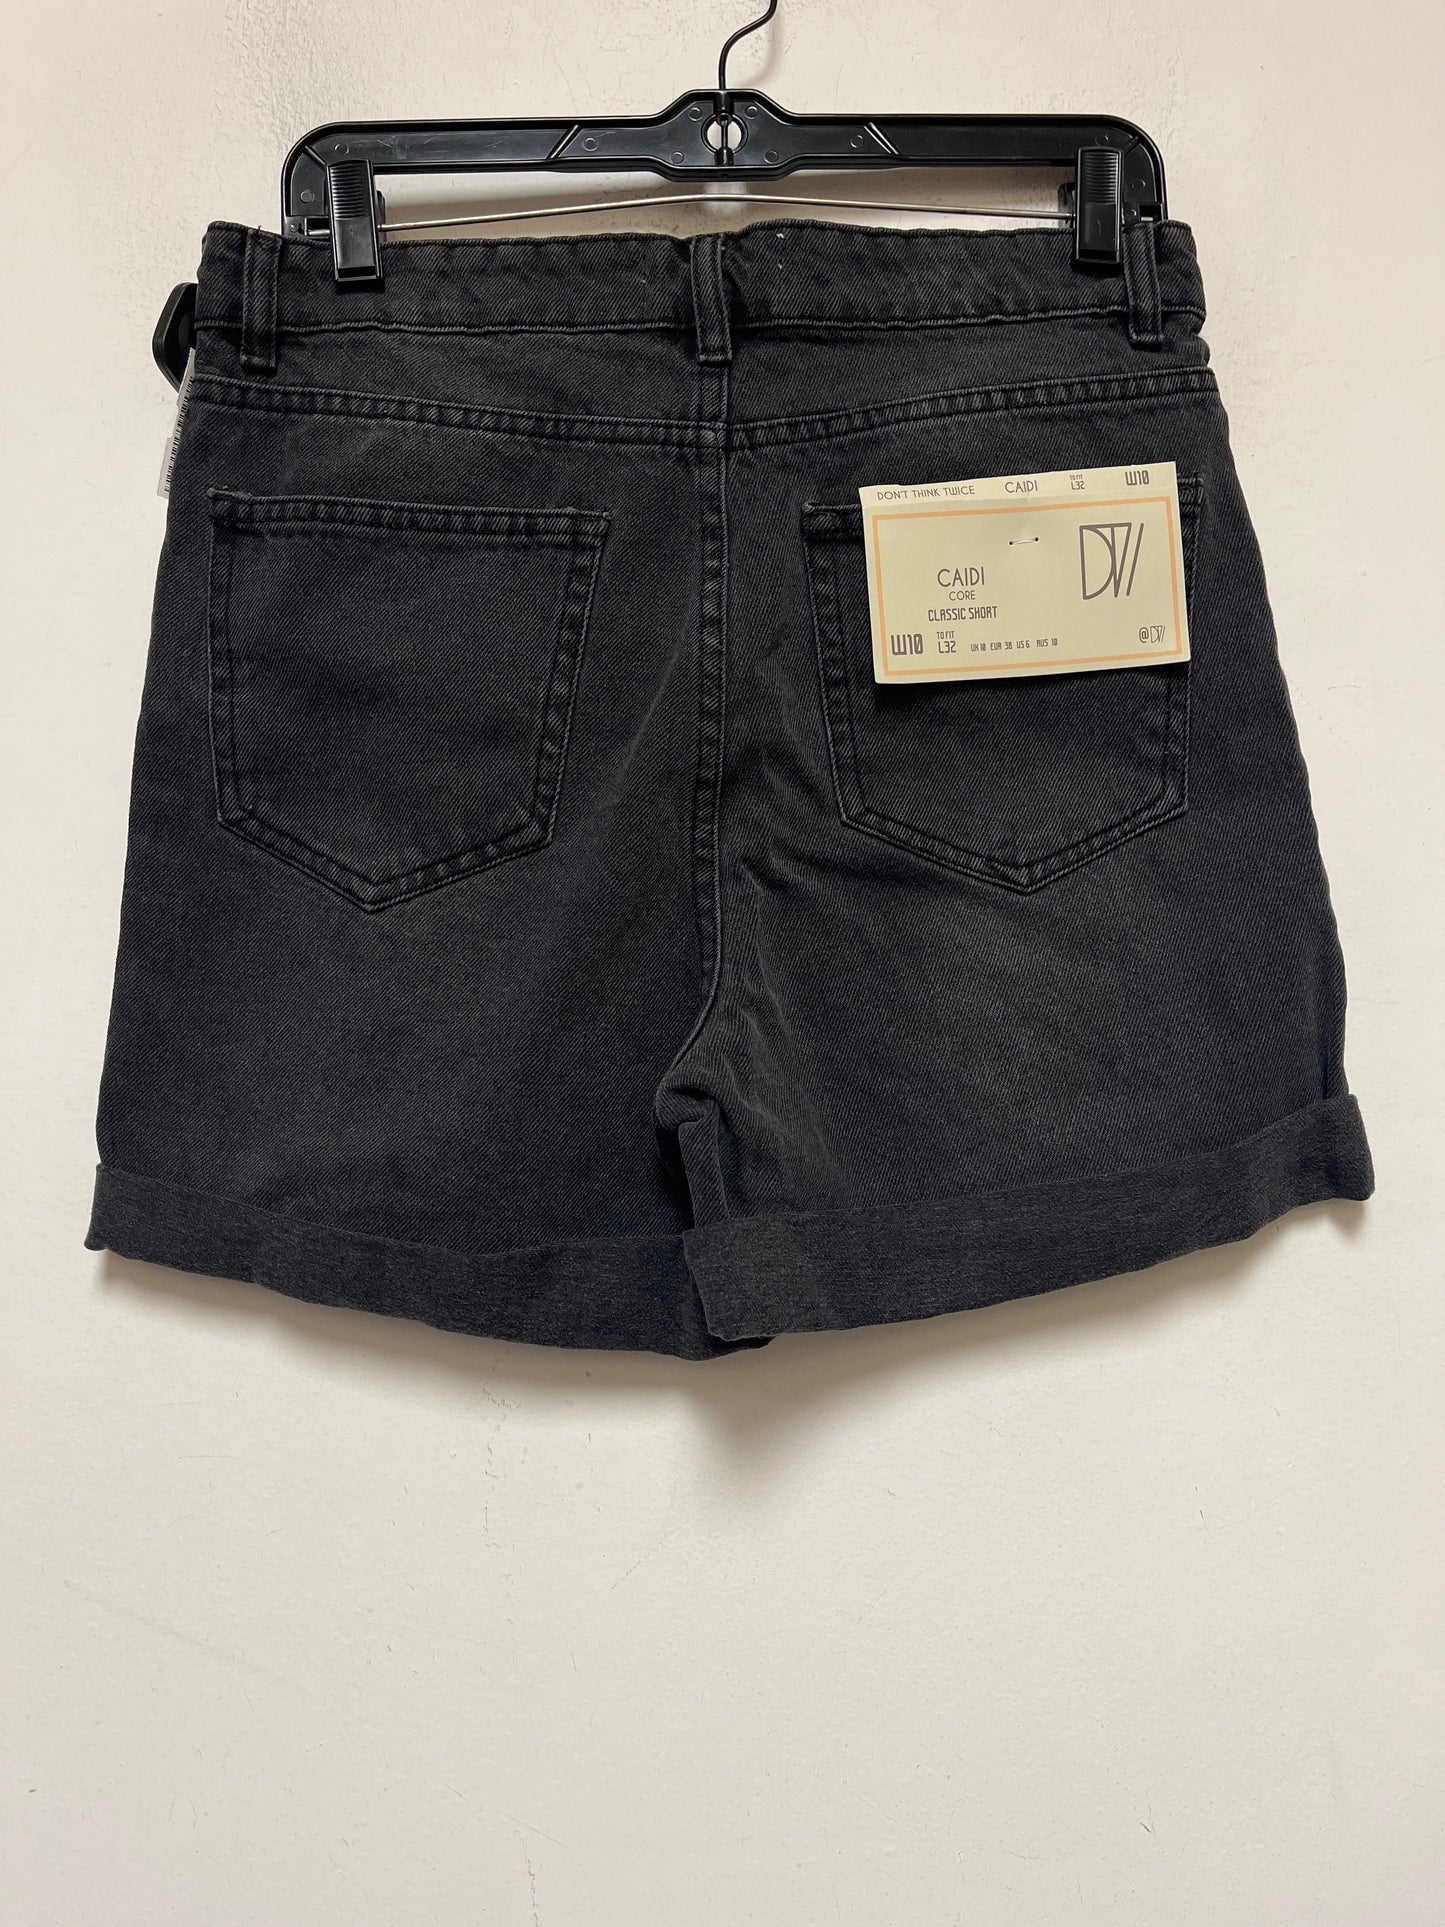 Black Denim Shorts Clothes Mentor, Size 6